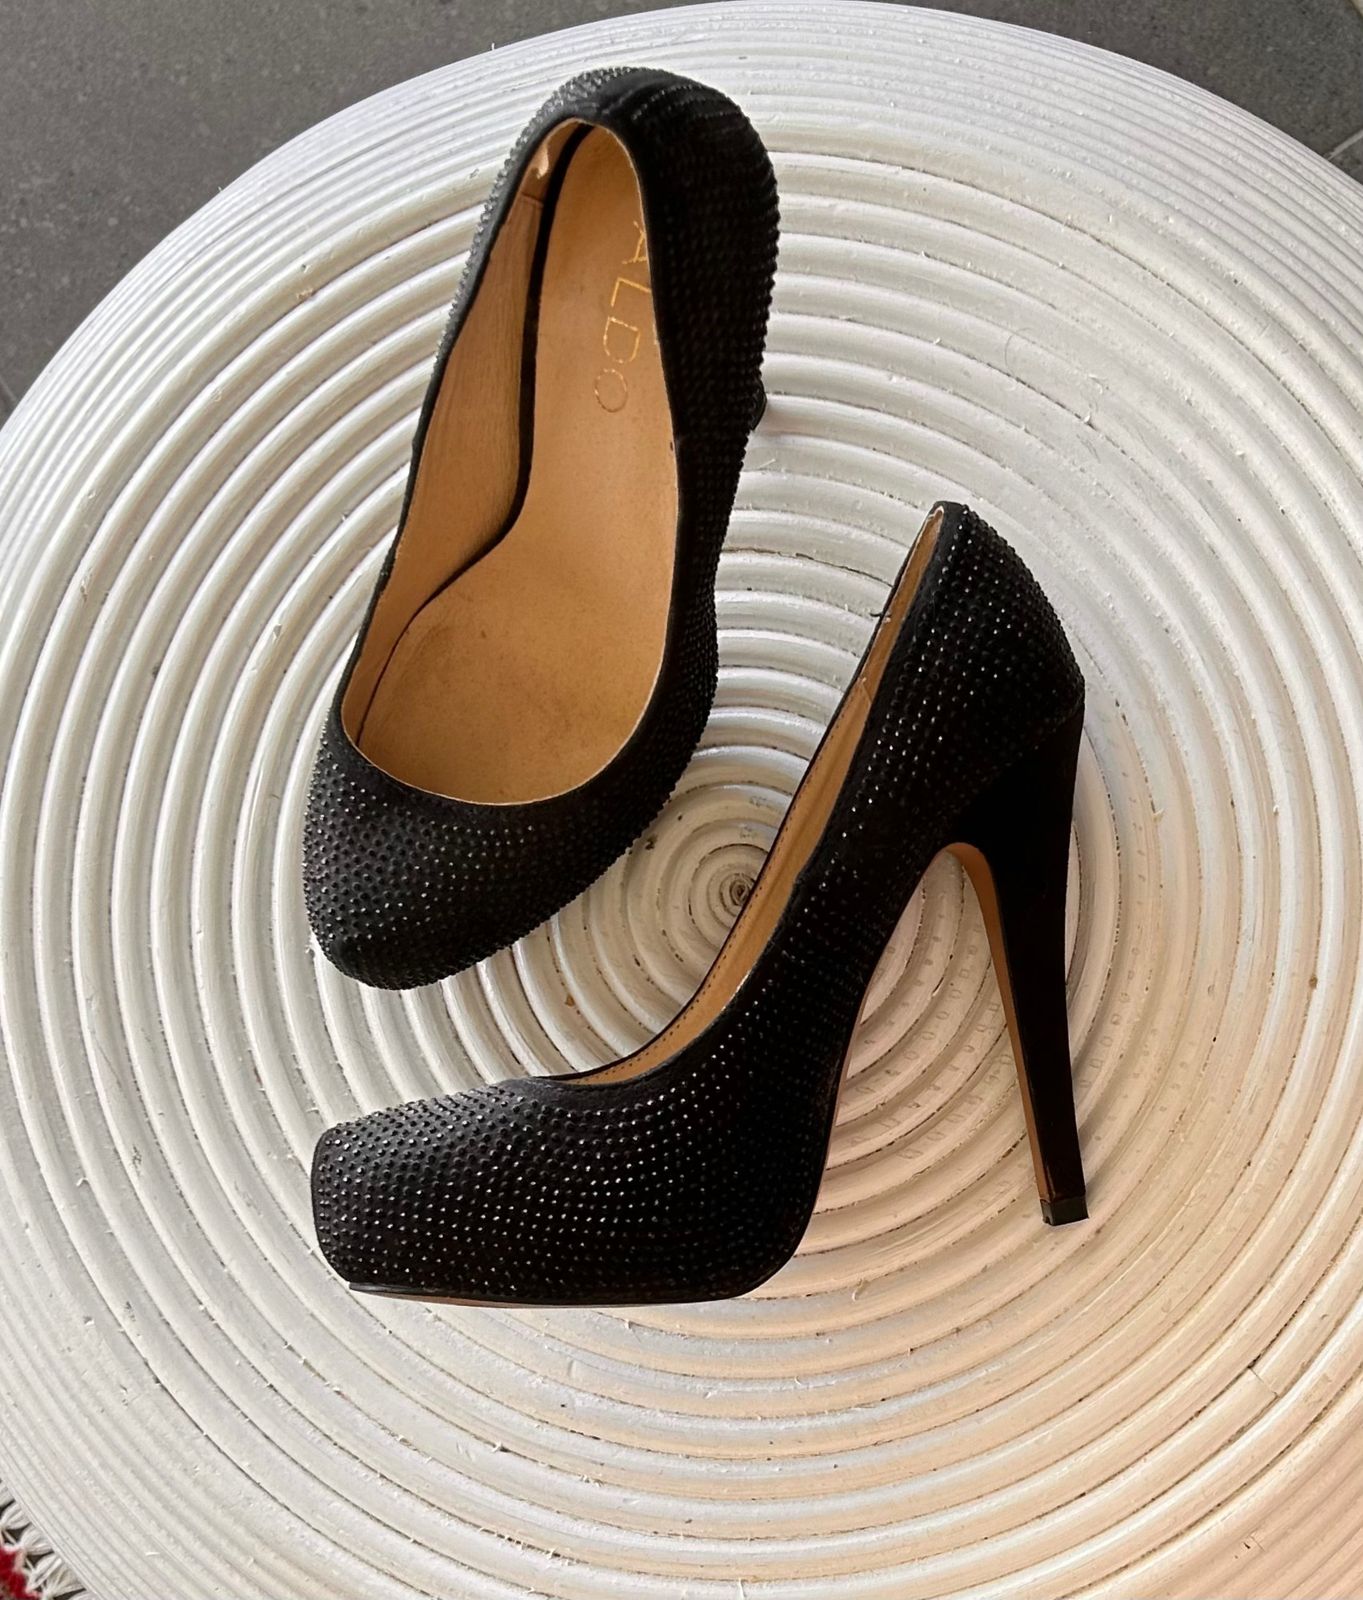 ALDO Lisaa heeled court shoes in black | ASOS